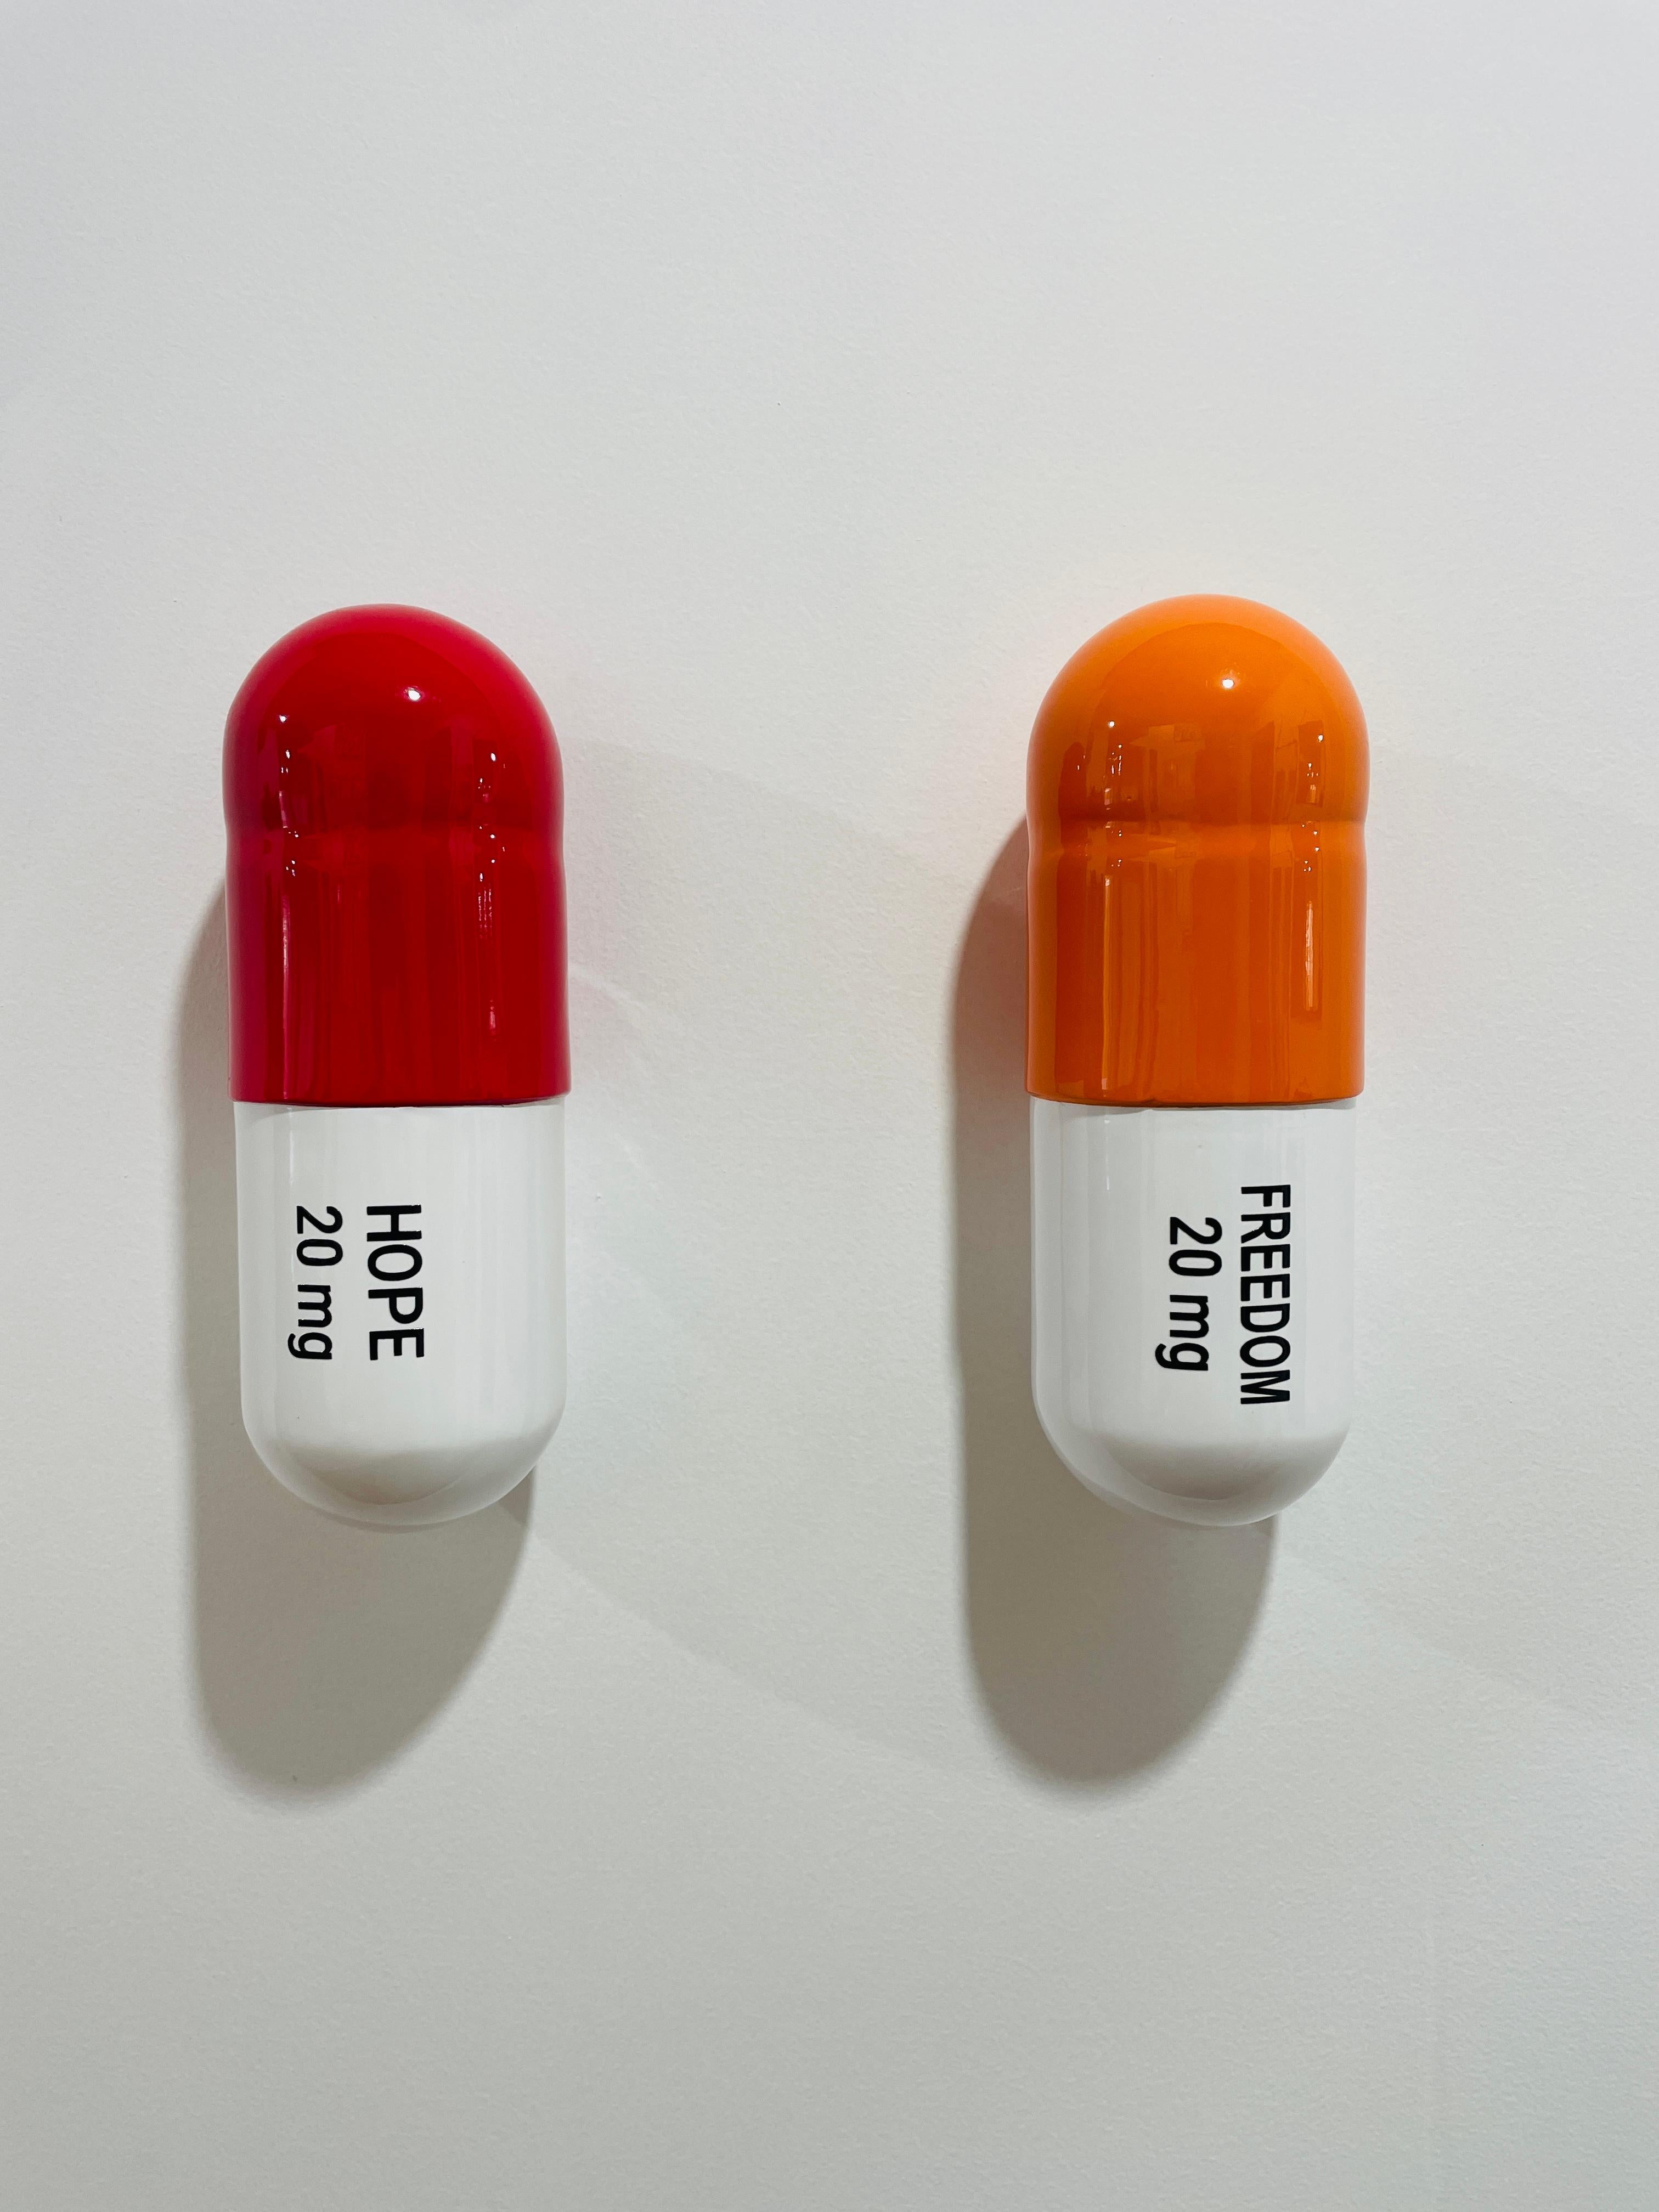 20 MG Hope pill Combo (rouge, orange, blanc) - sculpture figurative - Sculpture de Tal Nehoray